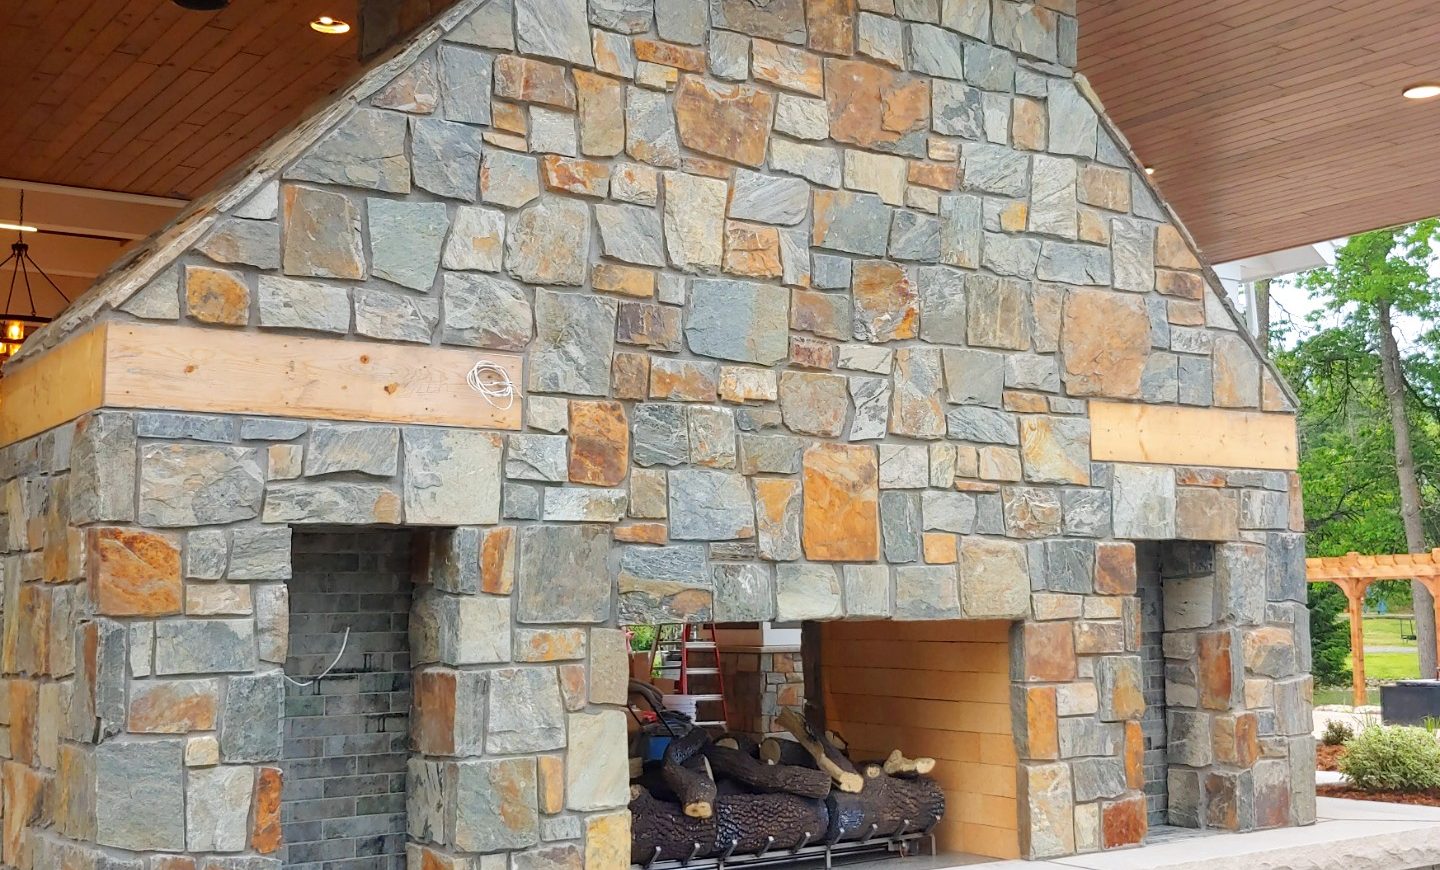 Fireplace at Maddens Pavillion's lobby area